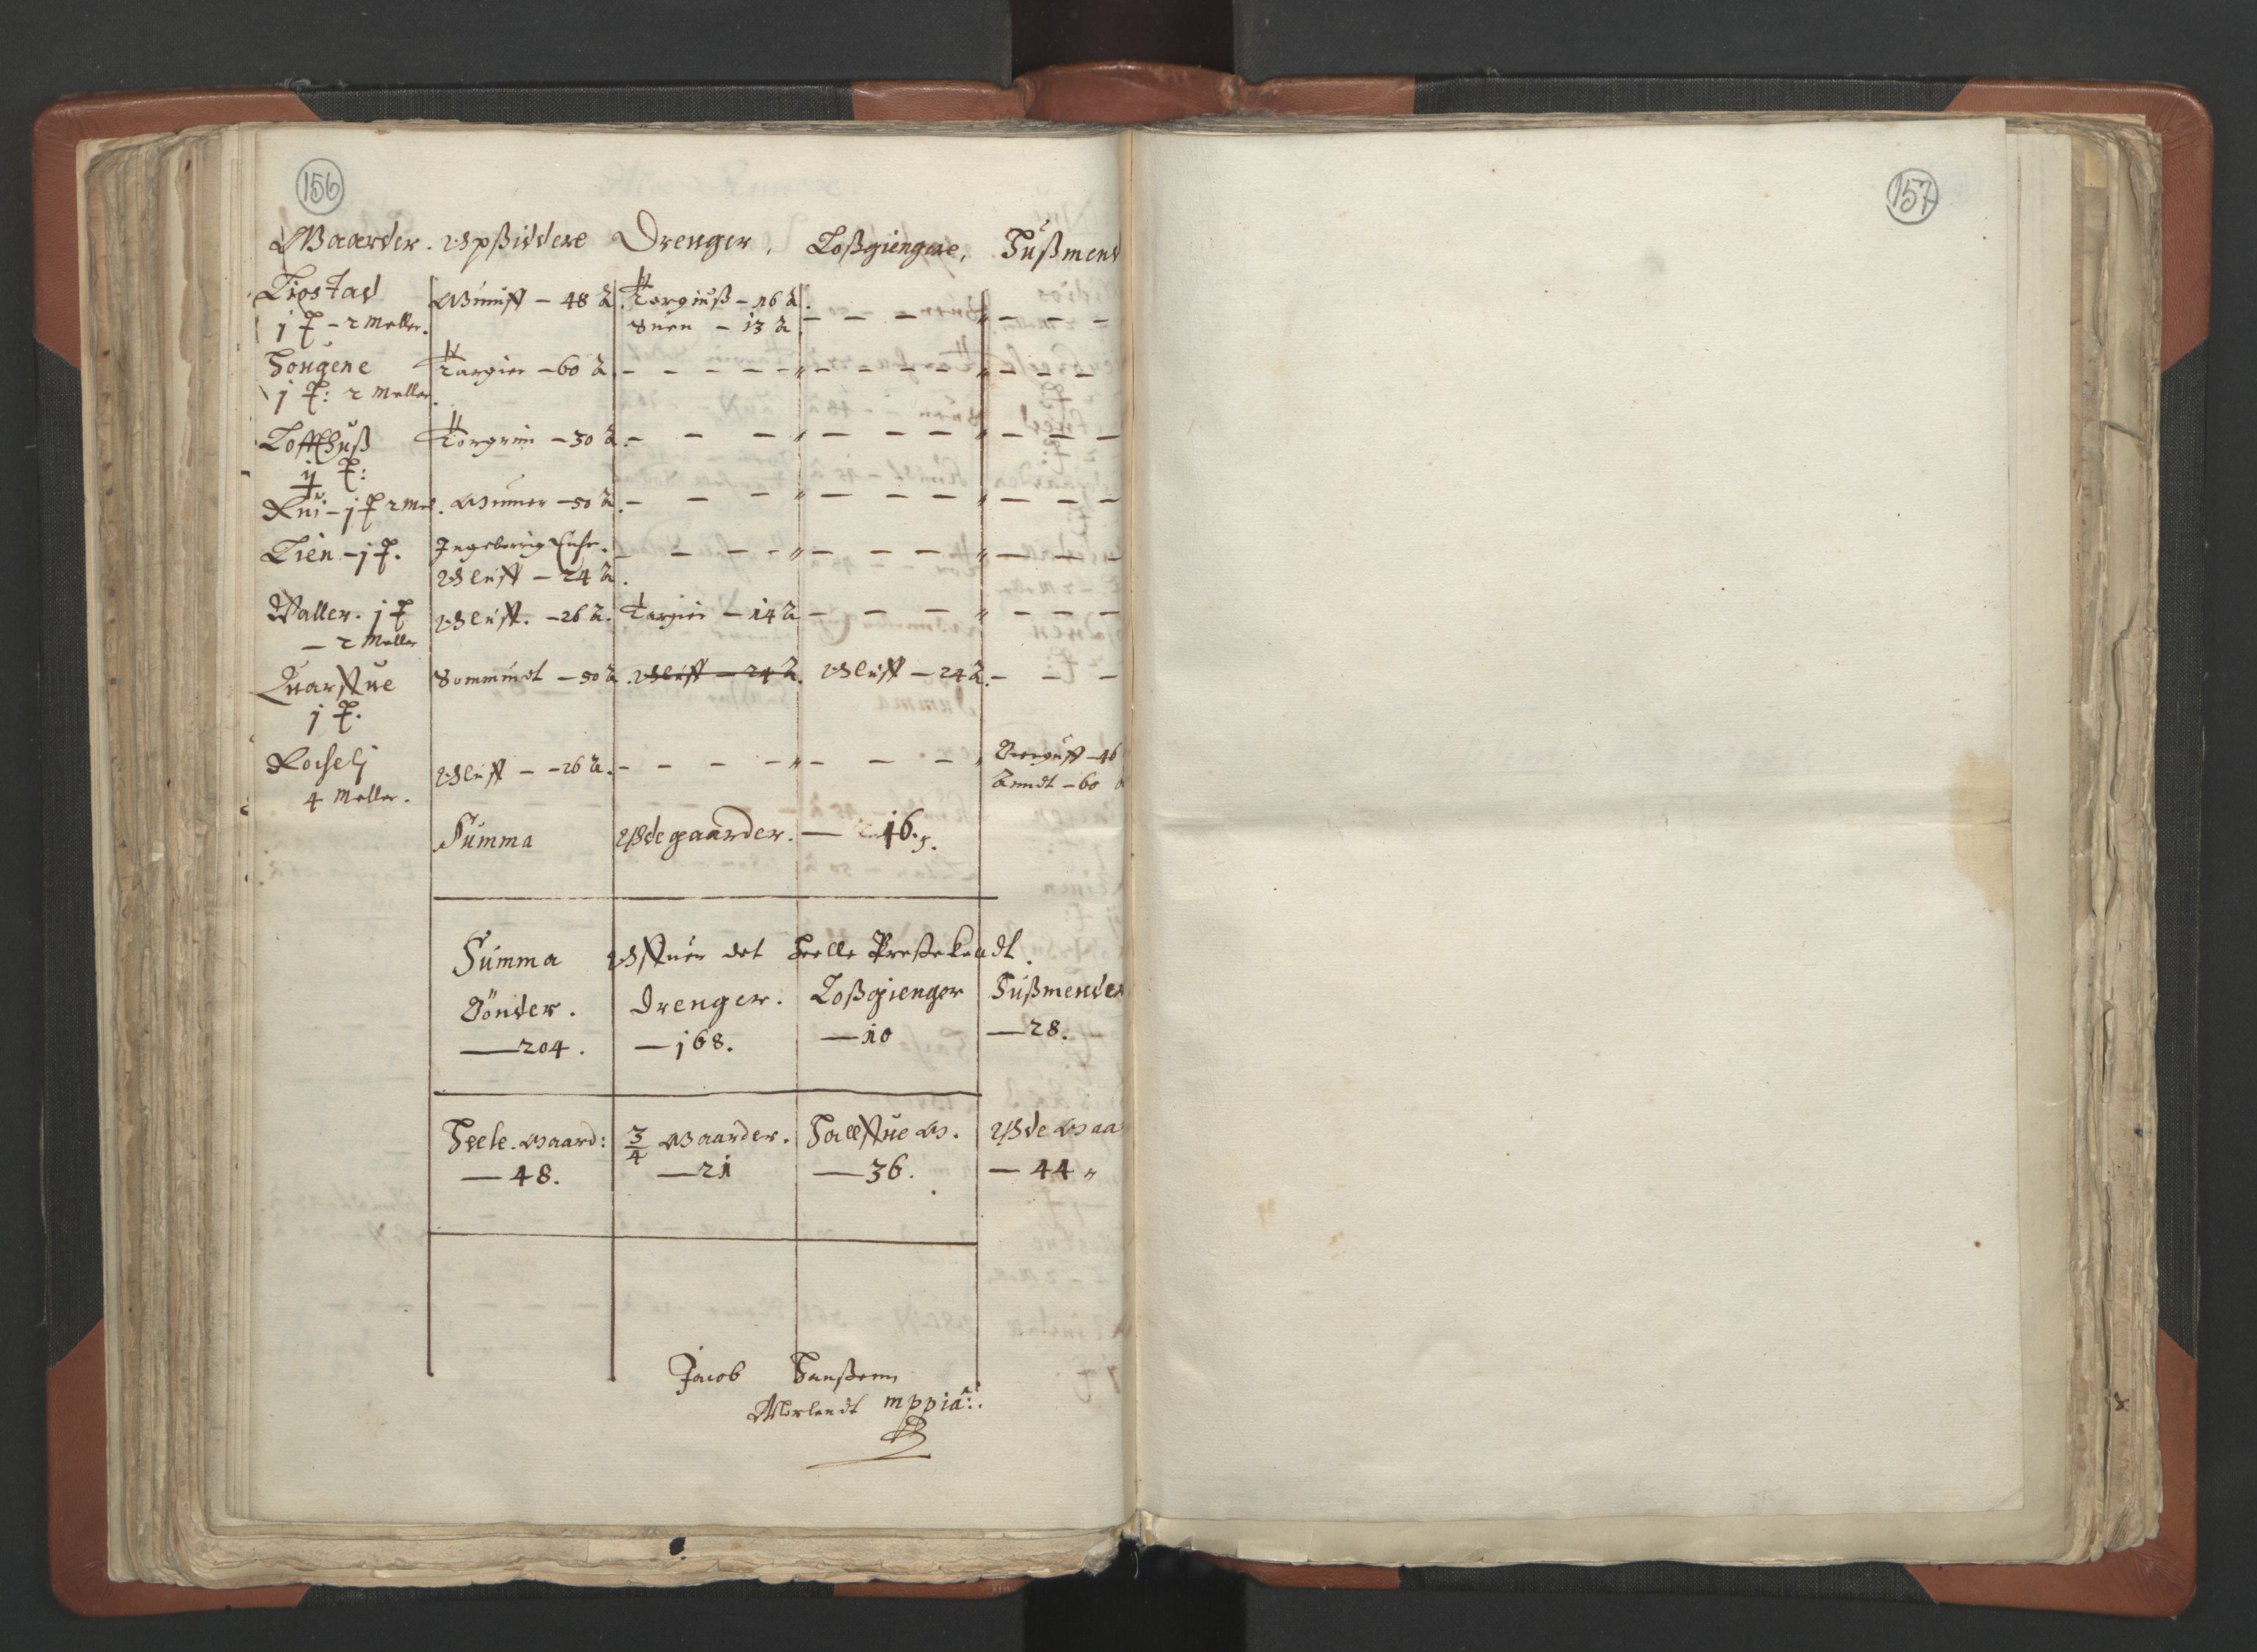 RA, Vicar's Census 1664-1666, no. 12: Øvre Telemark deanery, Nedre Telemark deanery and Bamble deanery, 1664-1666, p. 156-157